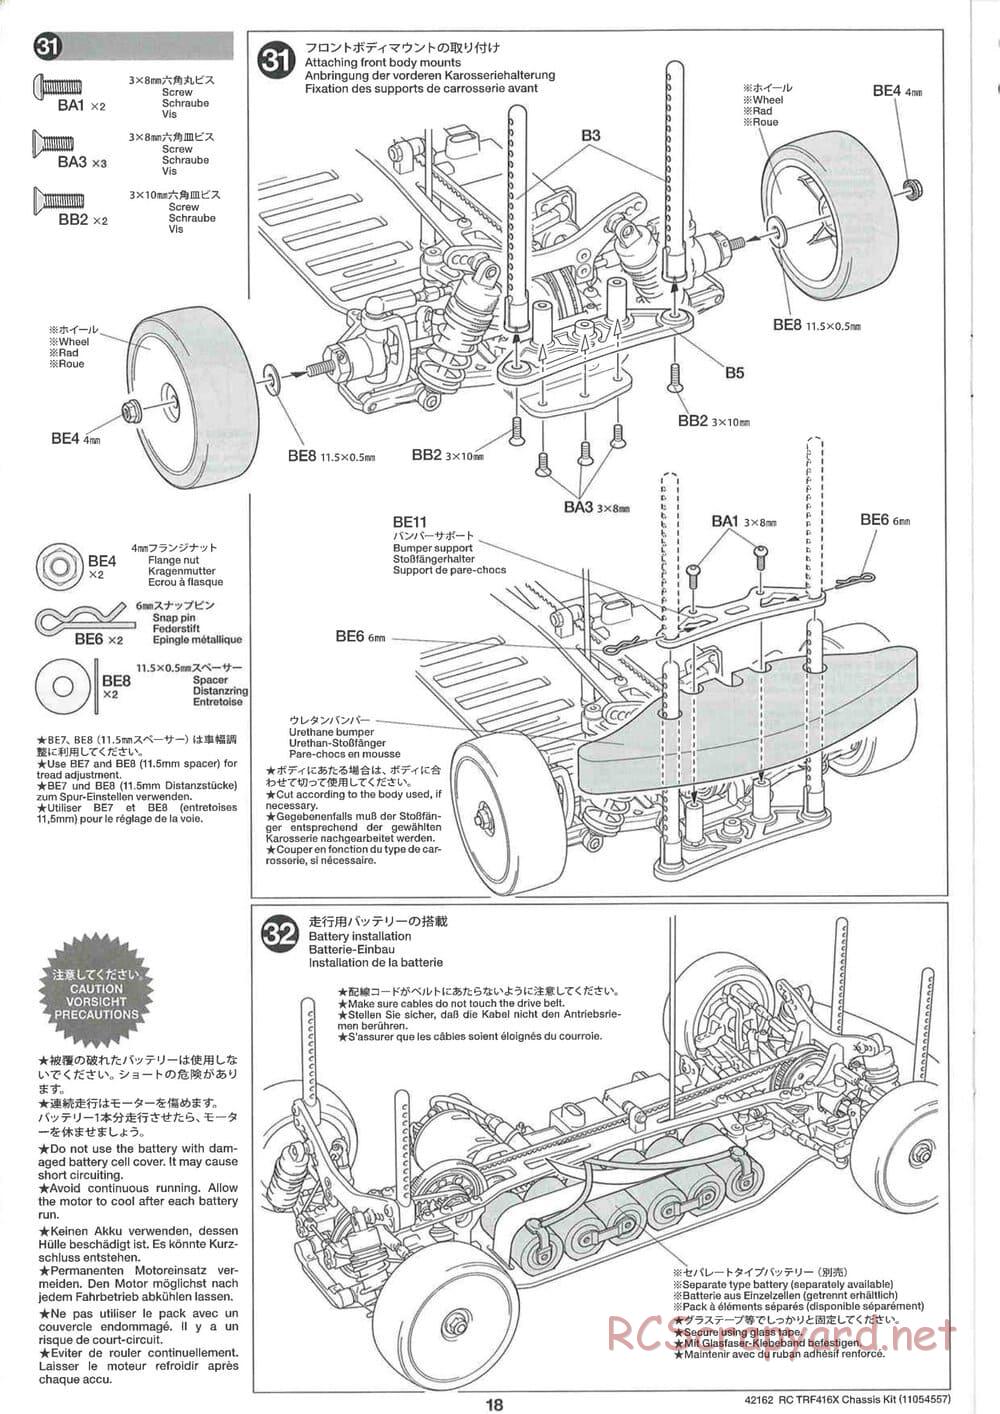 Tamiya - TRF416X Chassis - Manual - Page 18